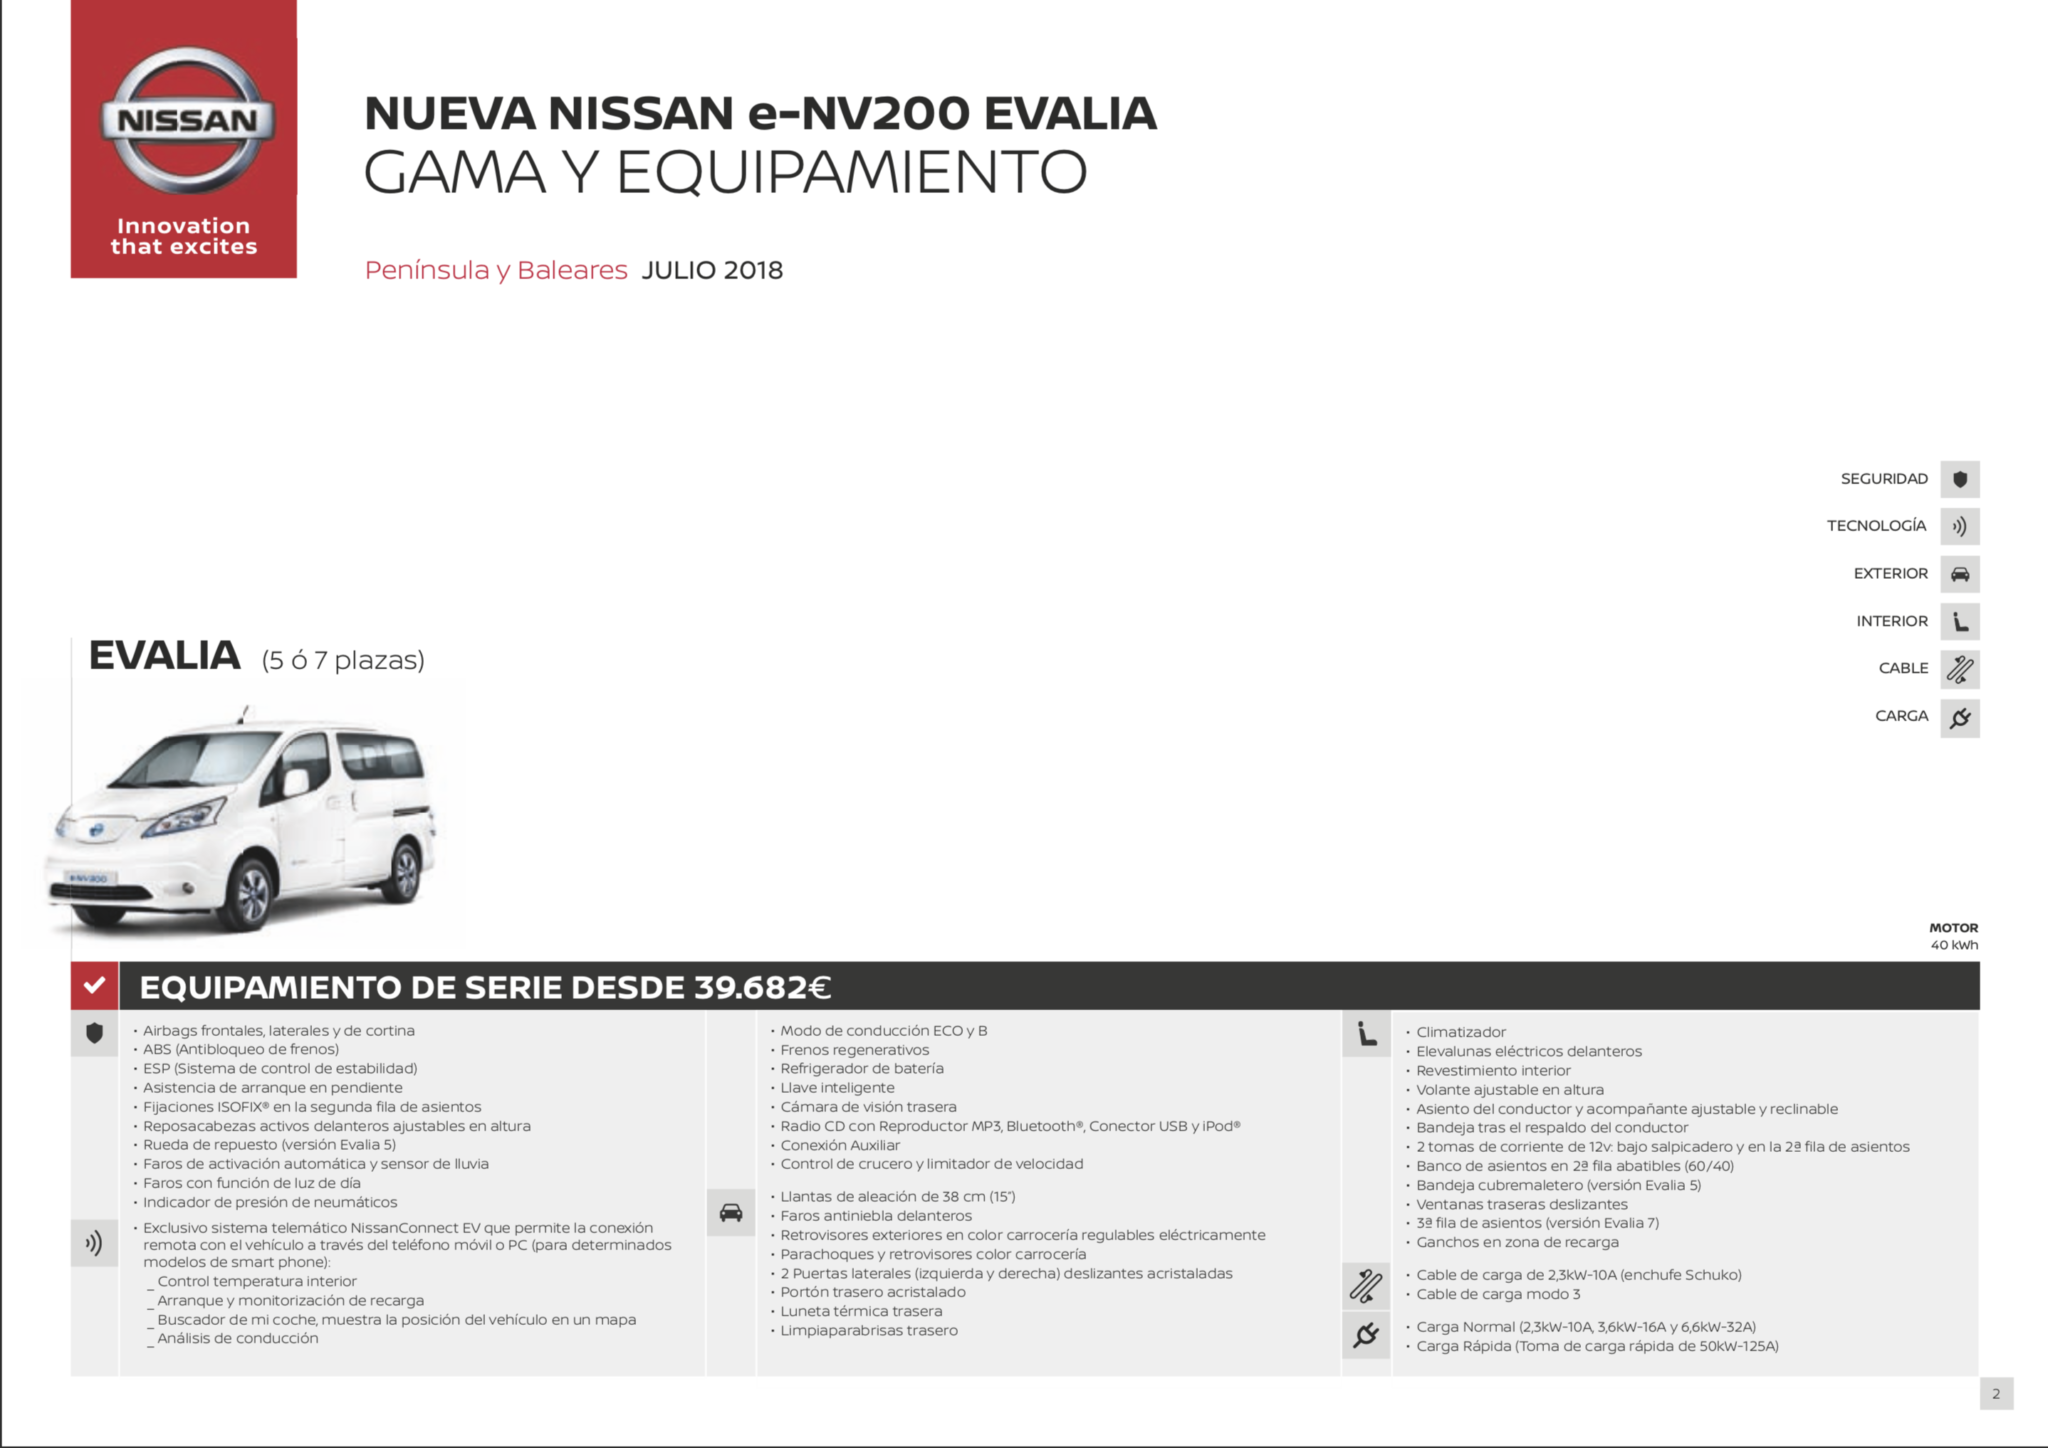 Equipamiento e nv200 evalia - Nissan e-NV200 7 plazas 40 kWh de capacidad